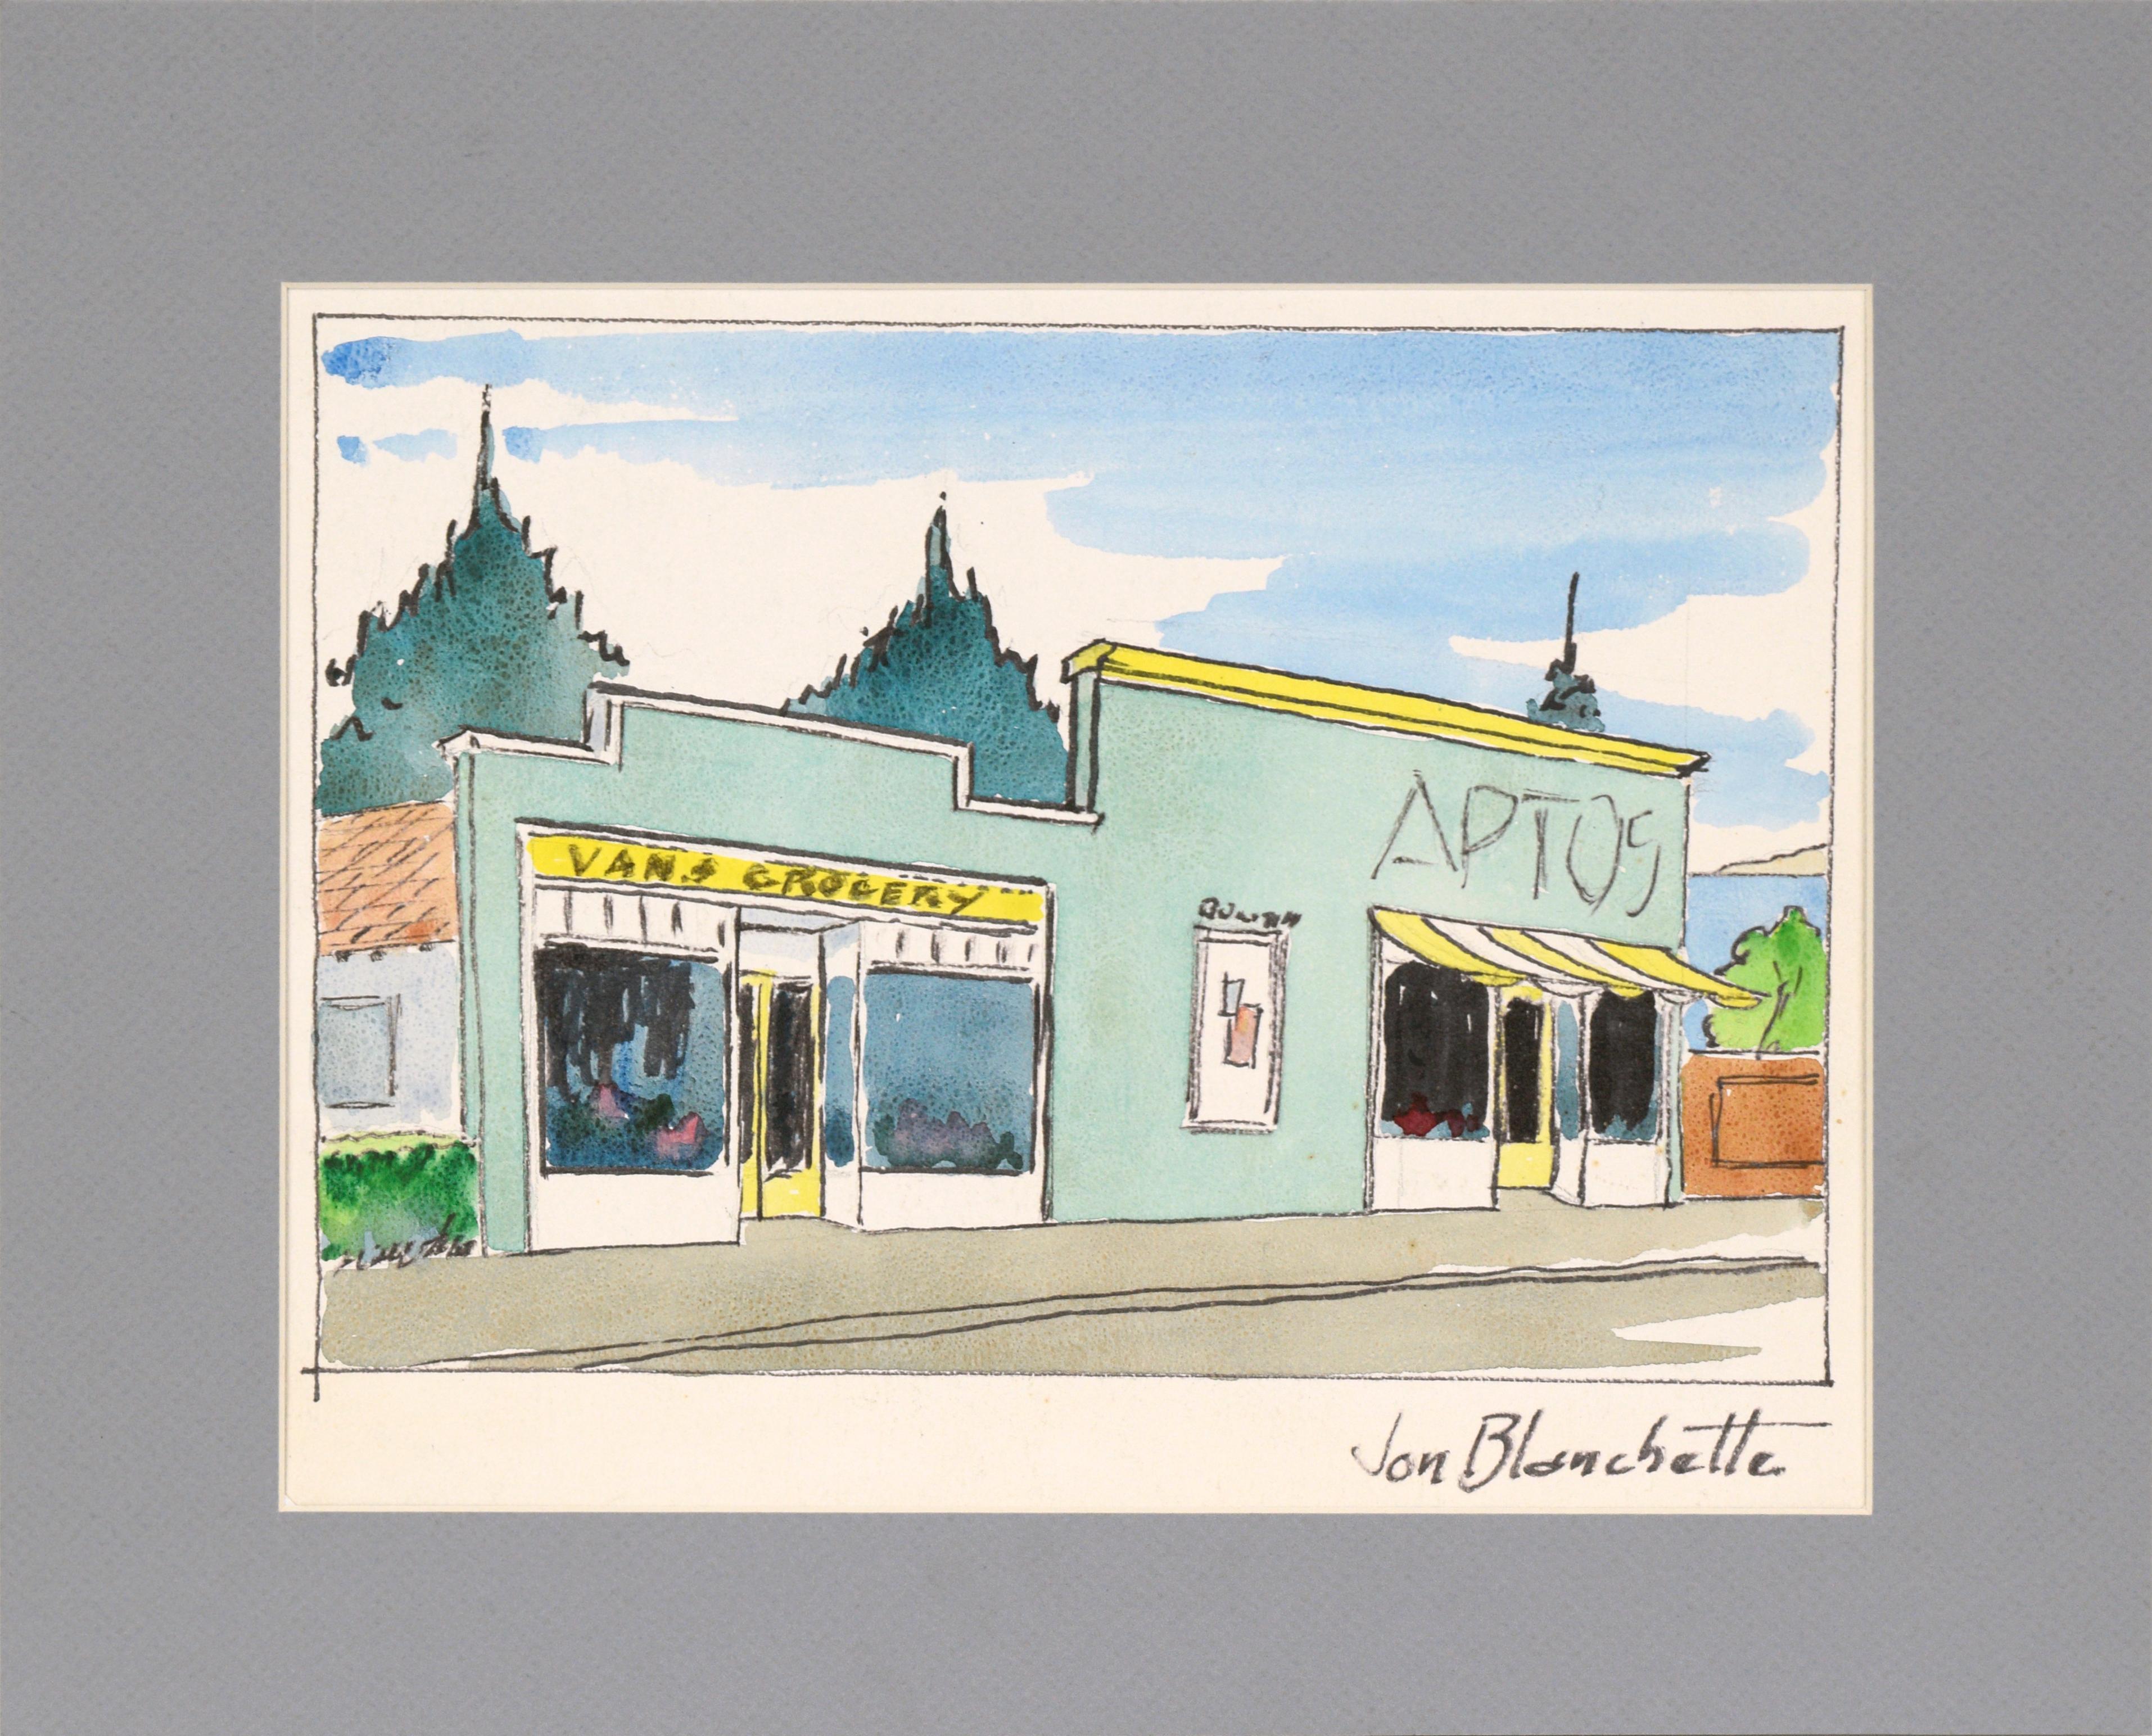 Van's Grocery, Aptos Village California by Jon Blanchette